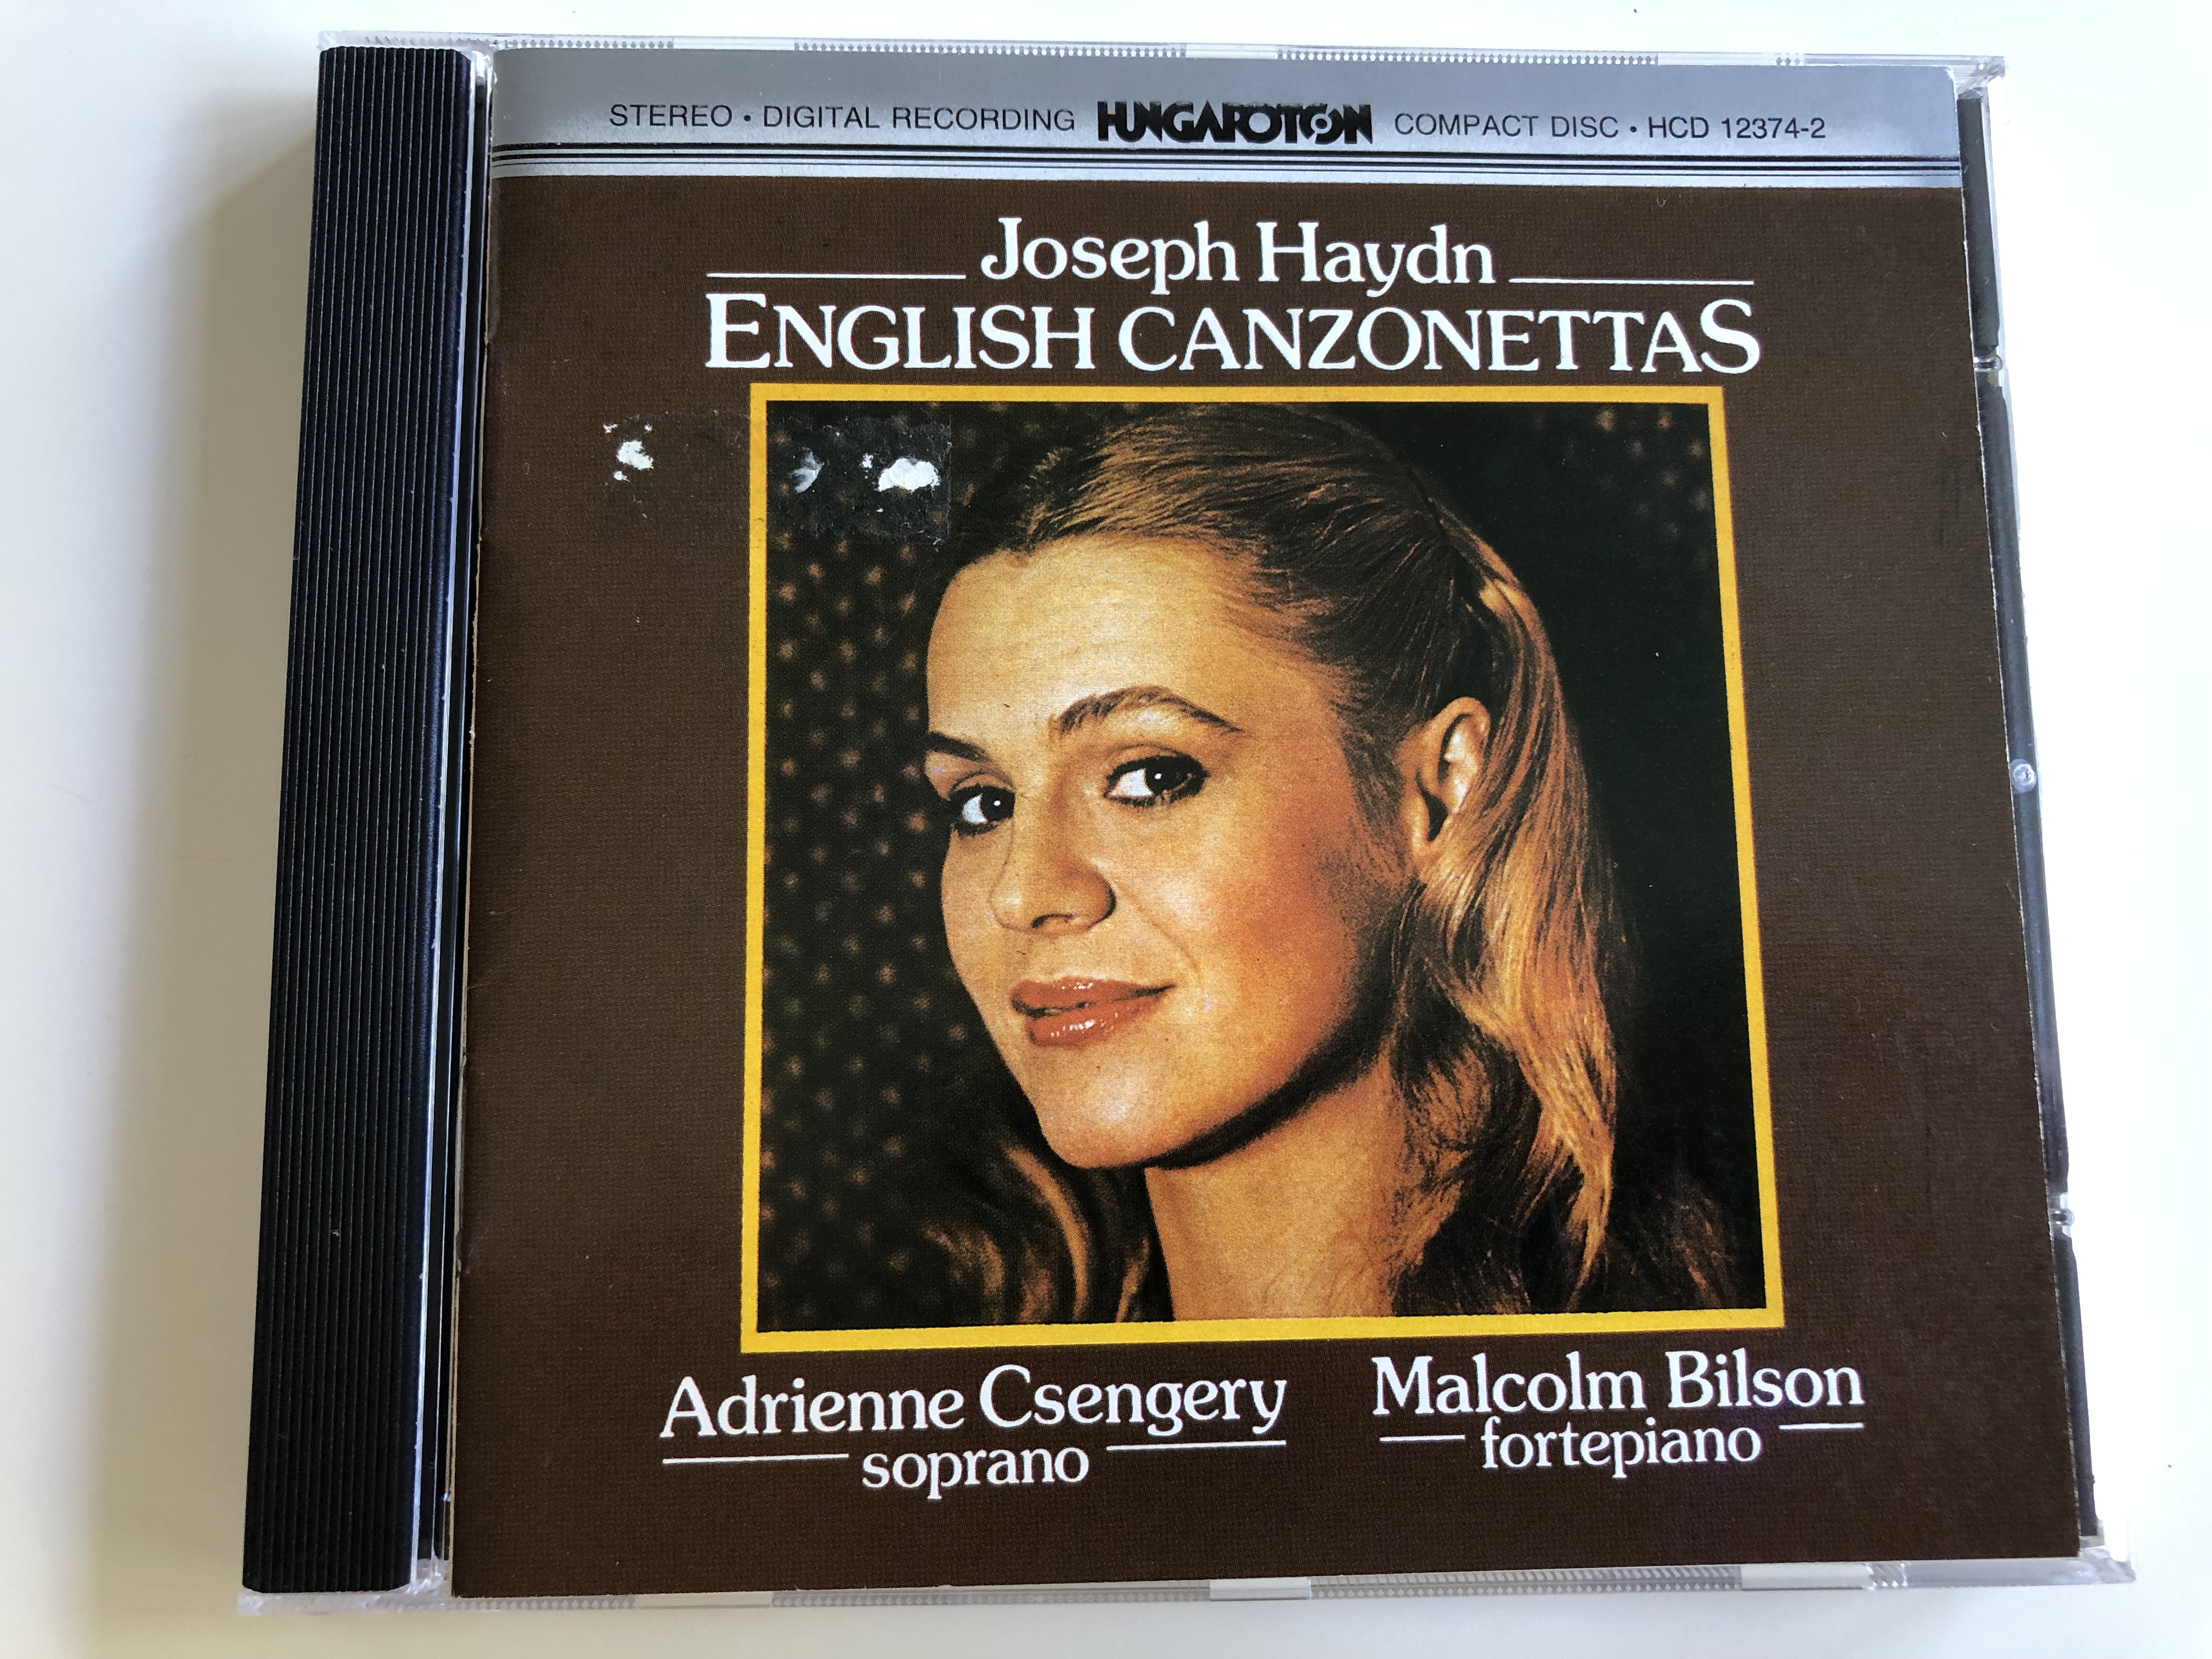 joseph-haydn-english-canzonettas-adrienne-csengery-soprano-malcolm-bilson-fortepiano-hungaroton-audio-cd-1982-hcd-12374-2-1-.jpg